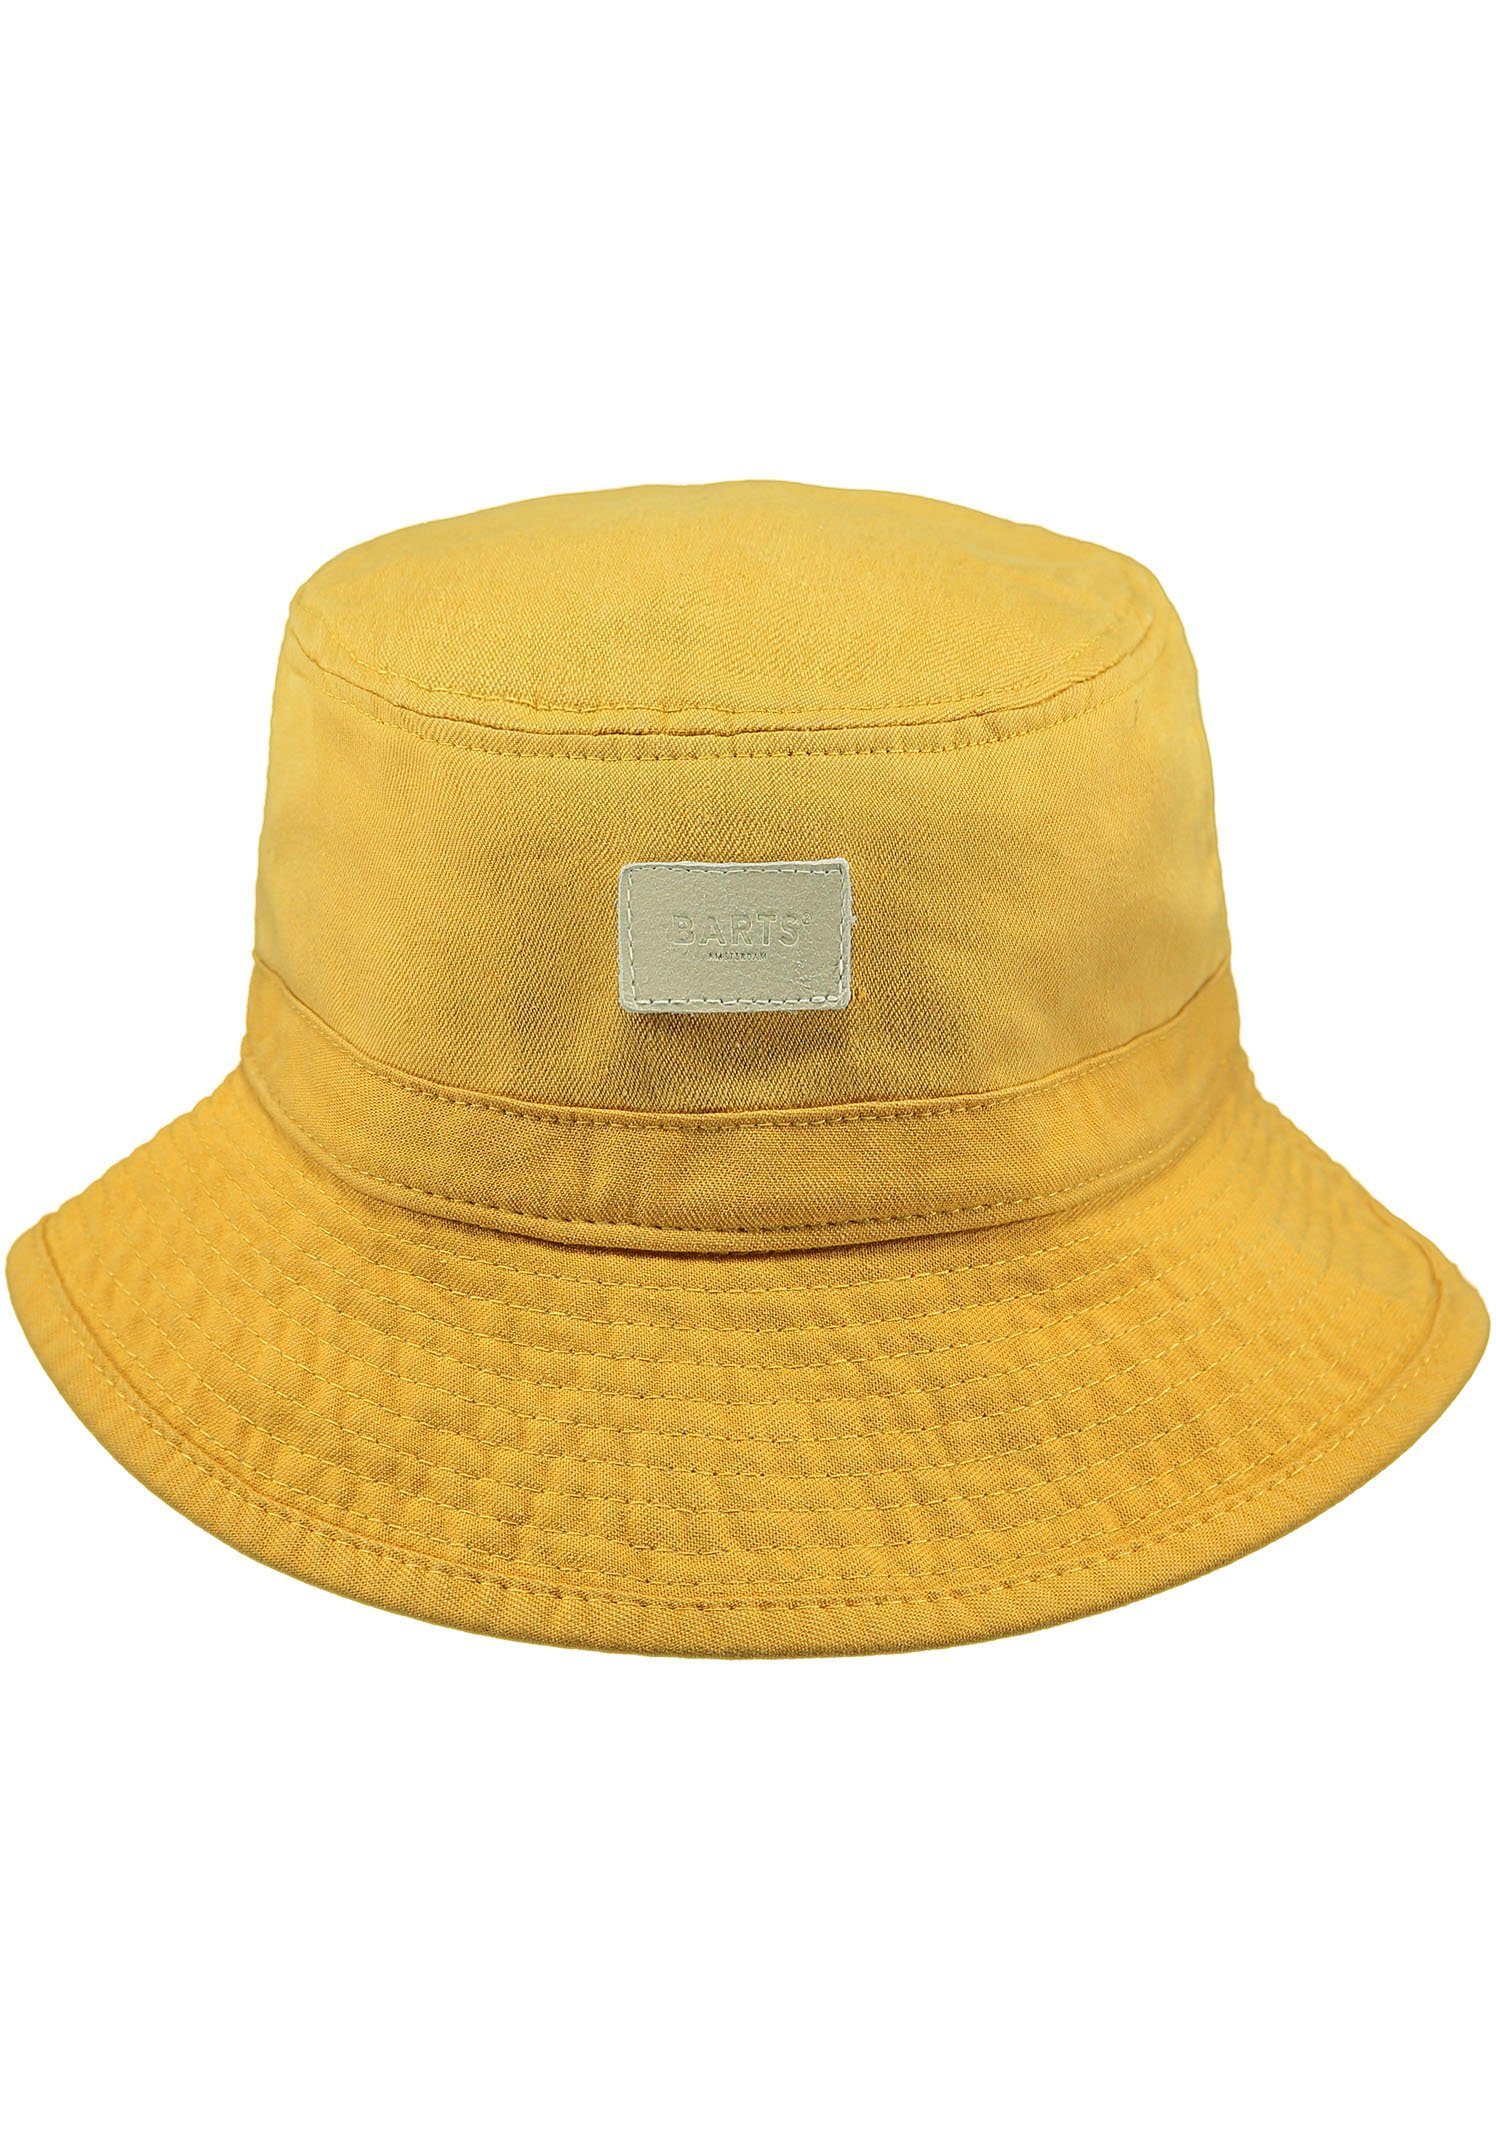 Barts Fischerhut yellow Hat Orohena